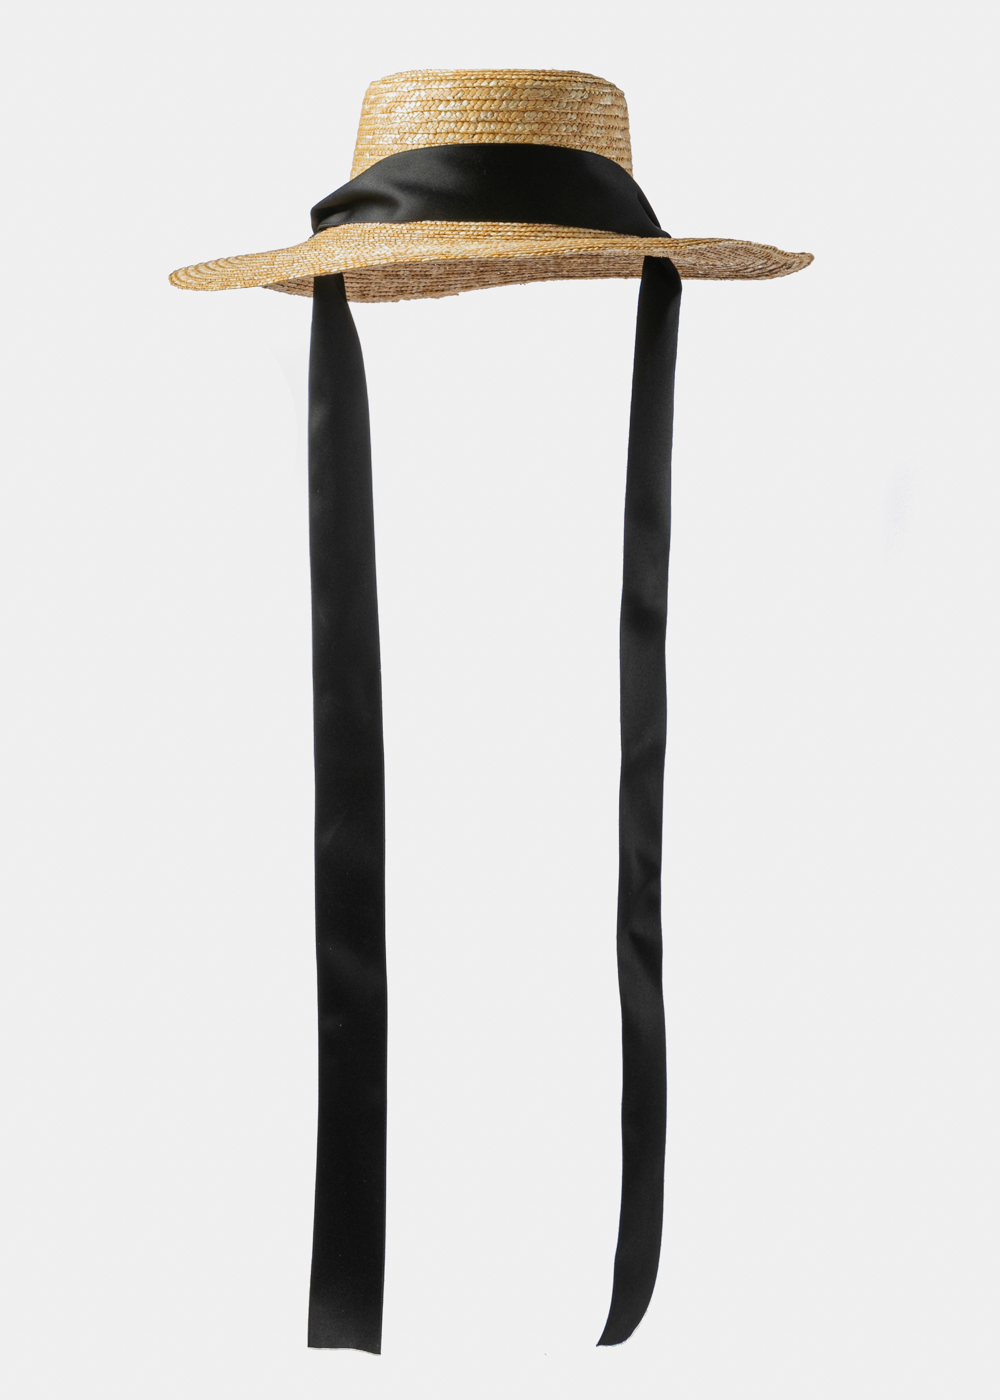 Natural Straw Hat w/ Black Neck Tie Ribbon